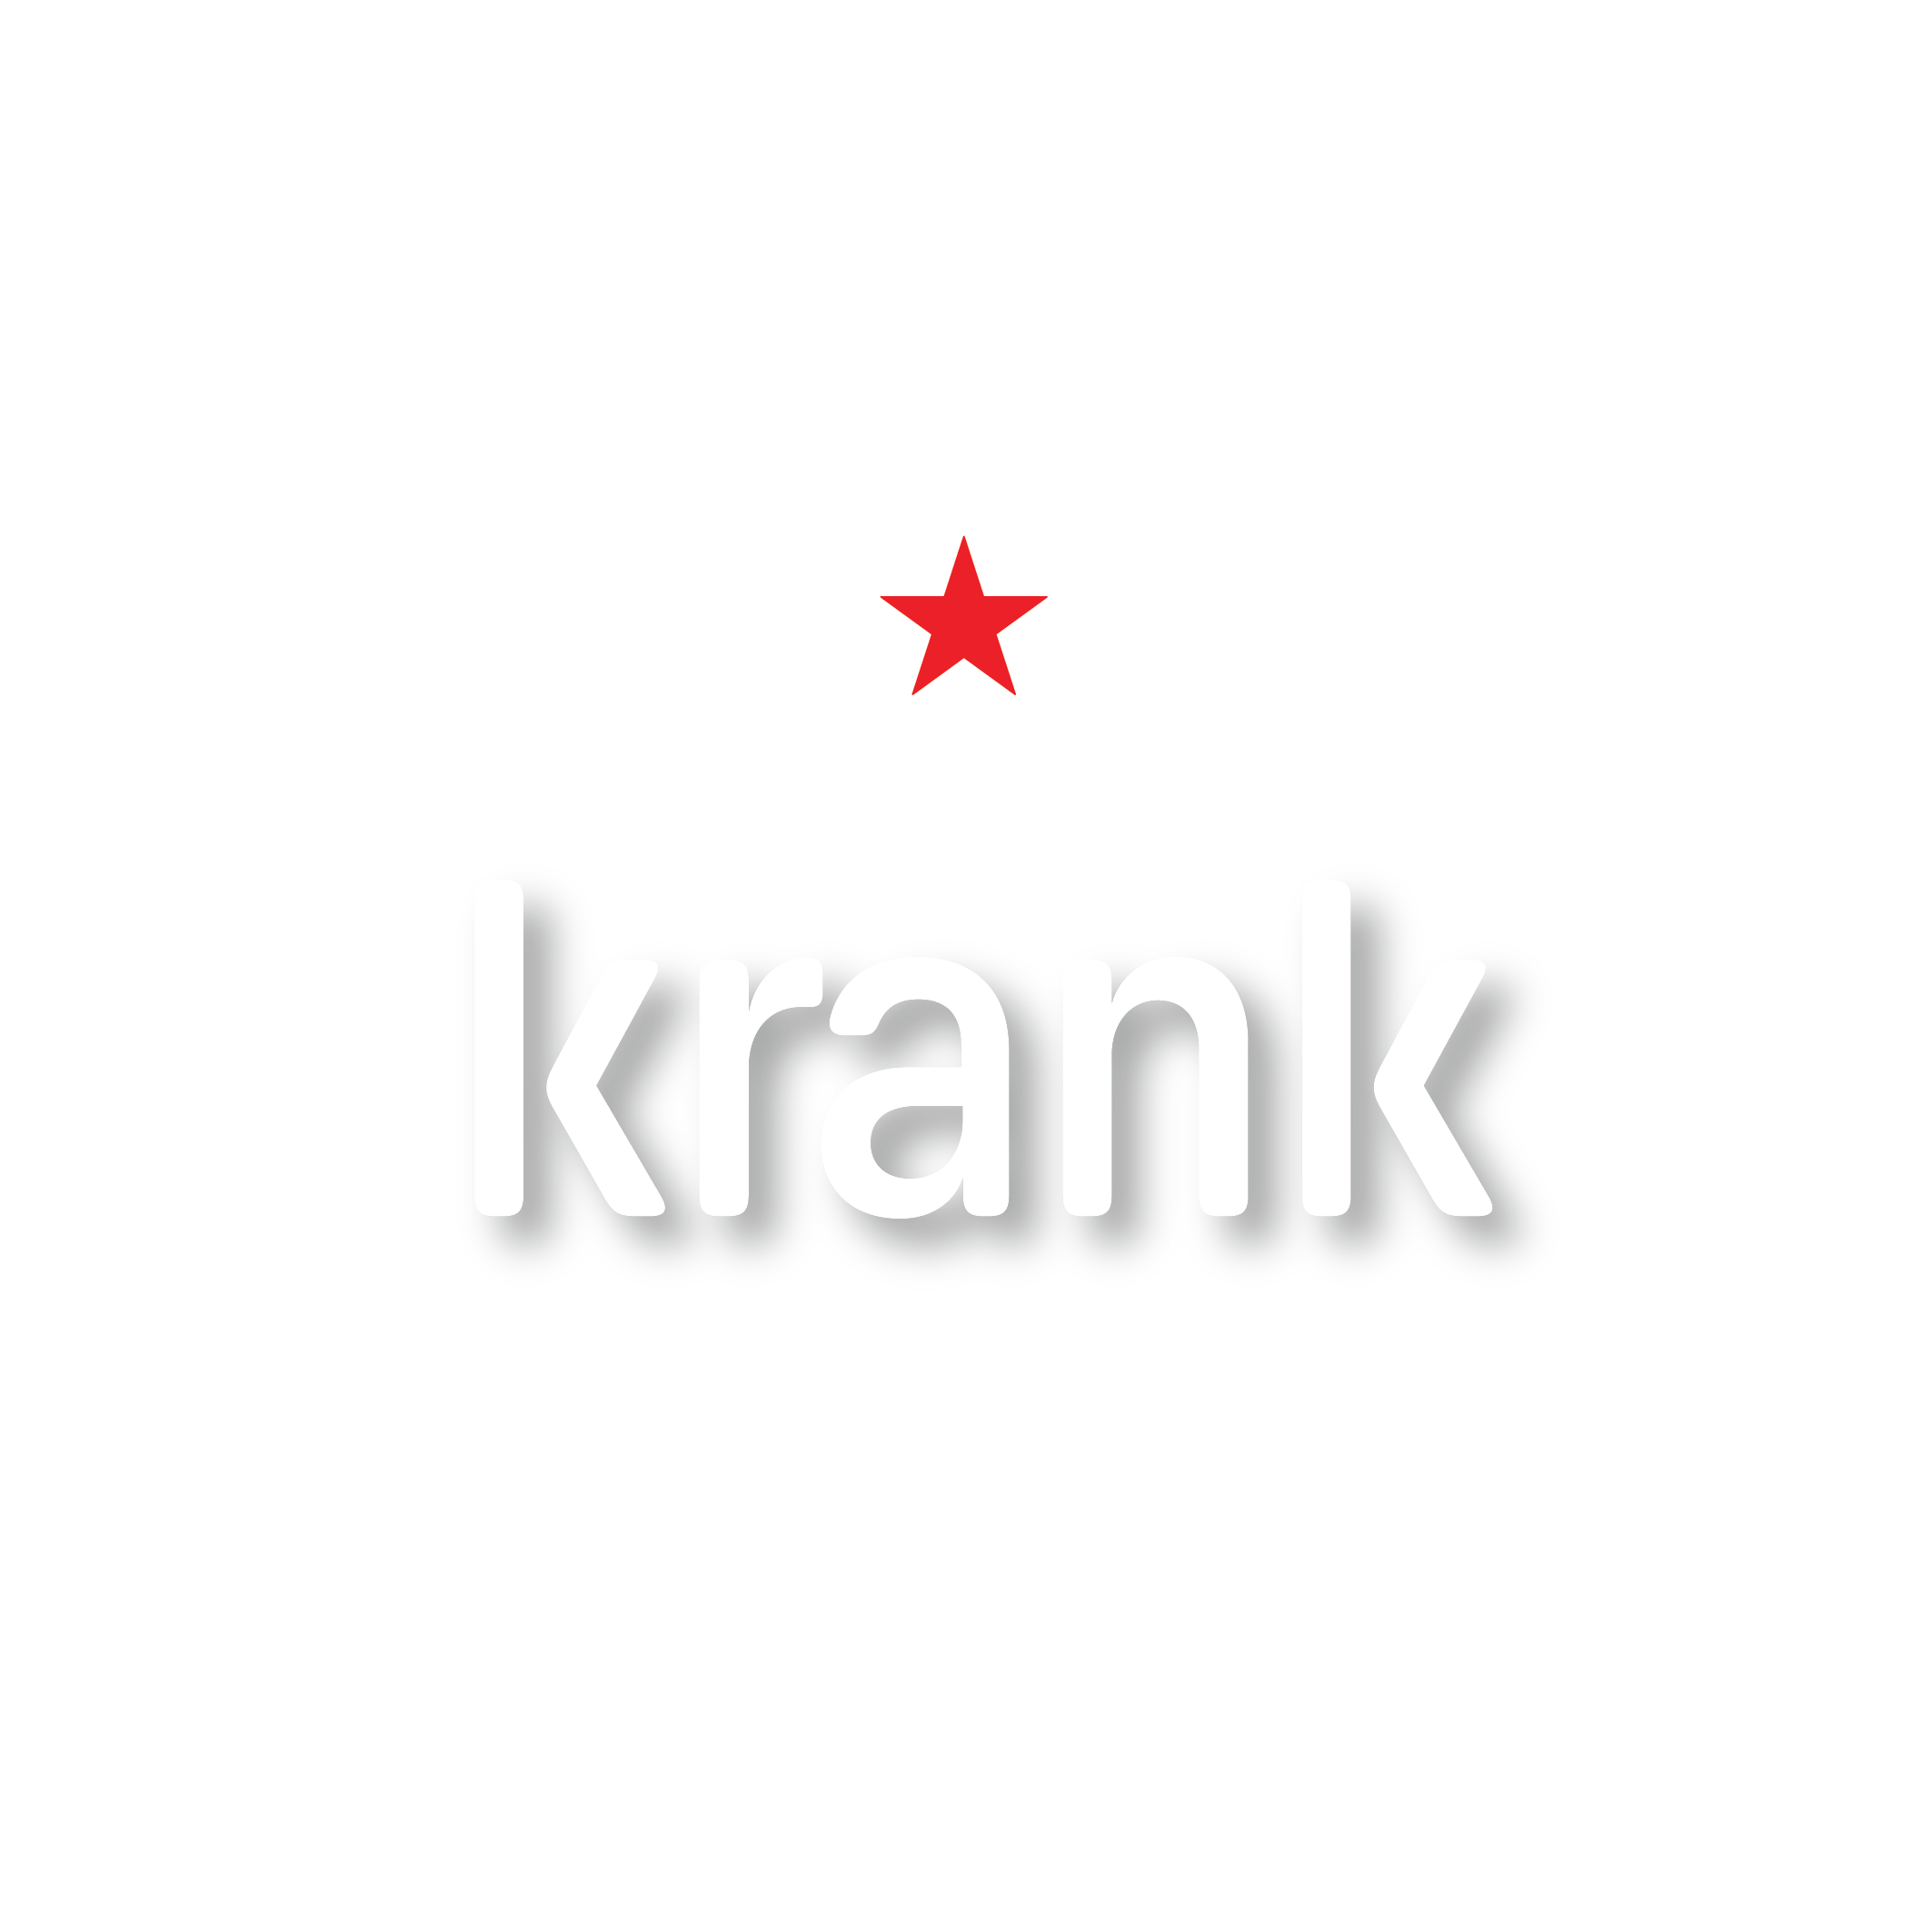 heineken-krank-goa-logo-02